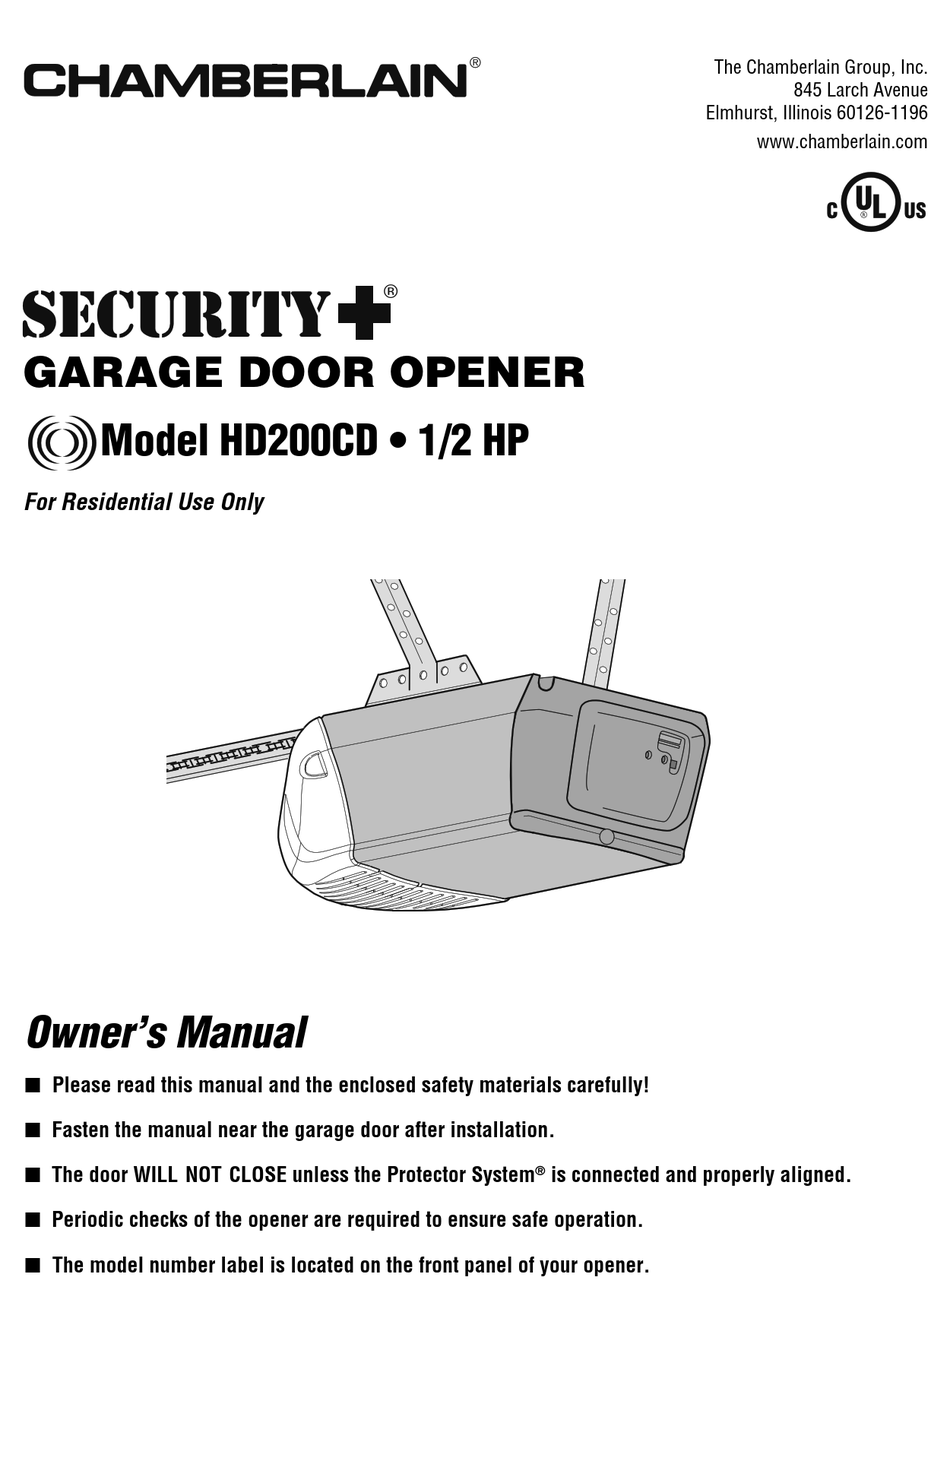 Chamberlain Hd200cd Security Owner S Manual Pdf Download Manualslib [ 1477 x 950 Pixel ]